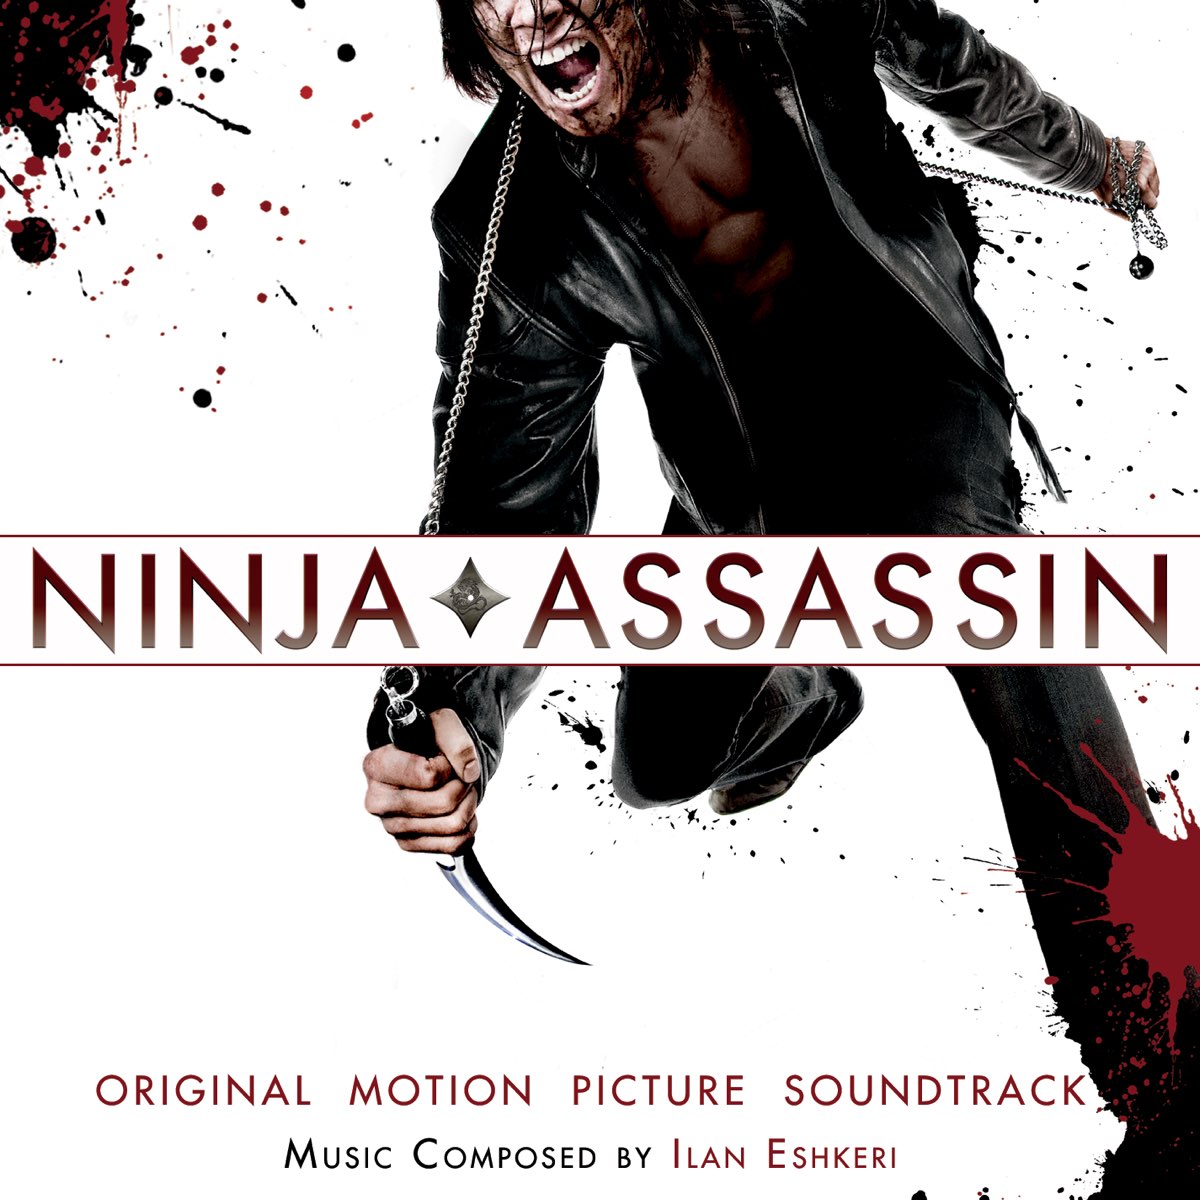 Ninja Assassin Production Notes